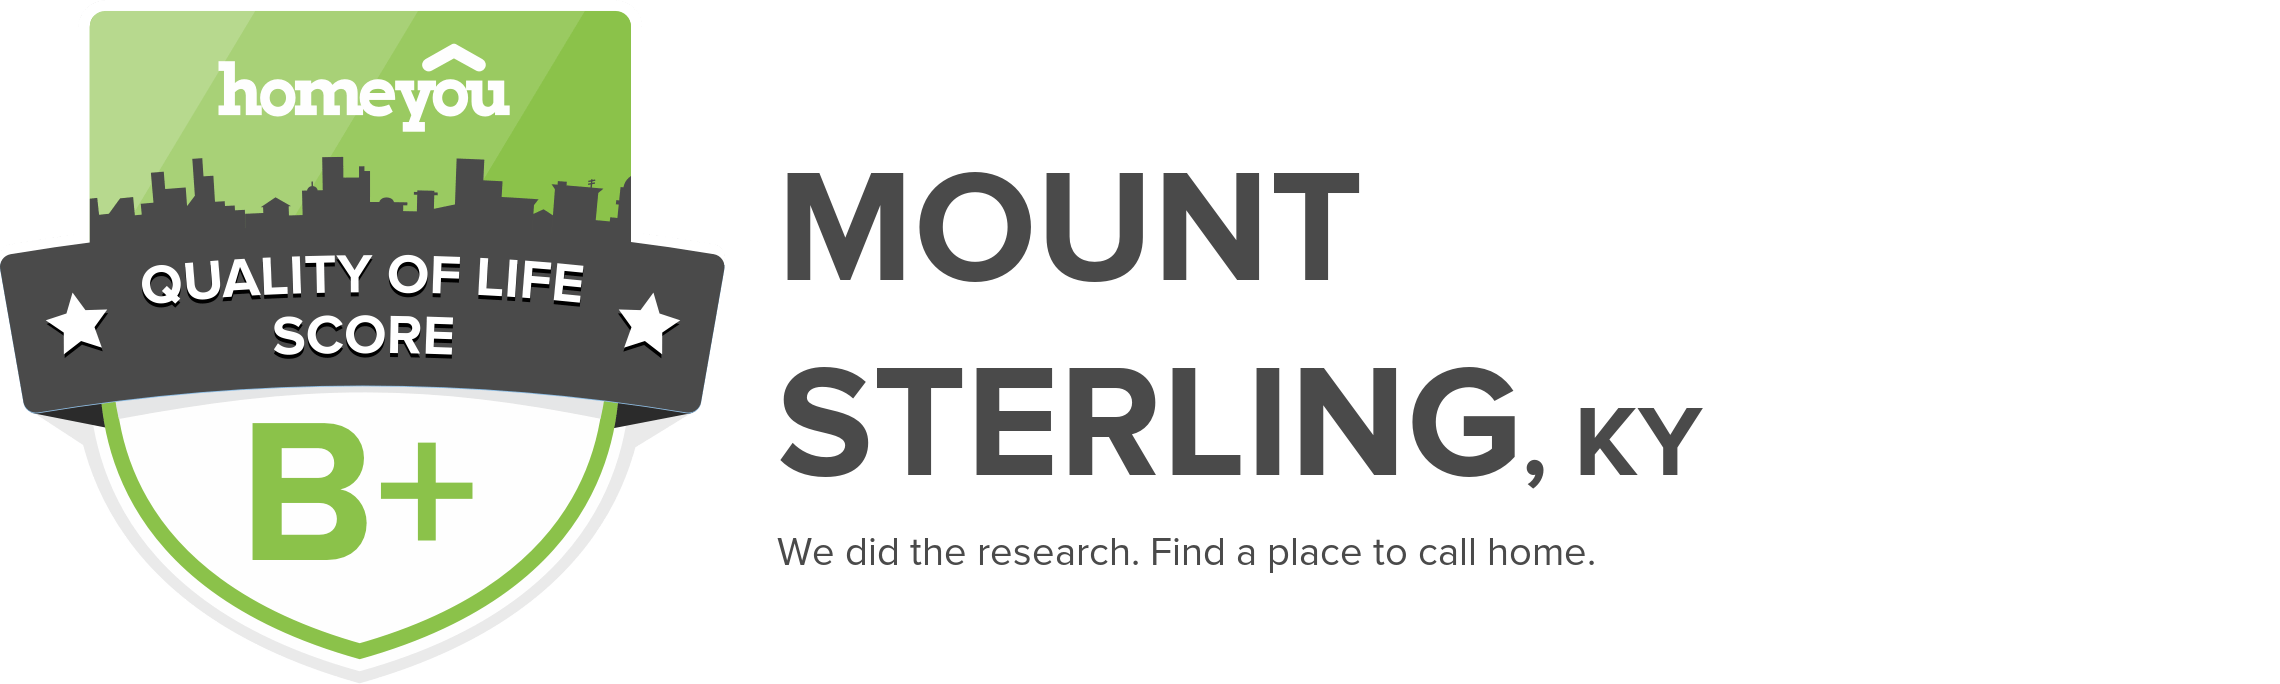 Mount Sterling, KY